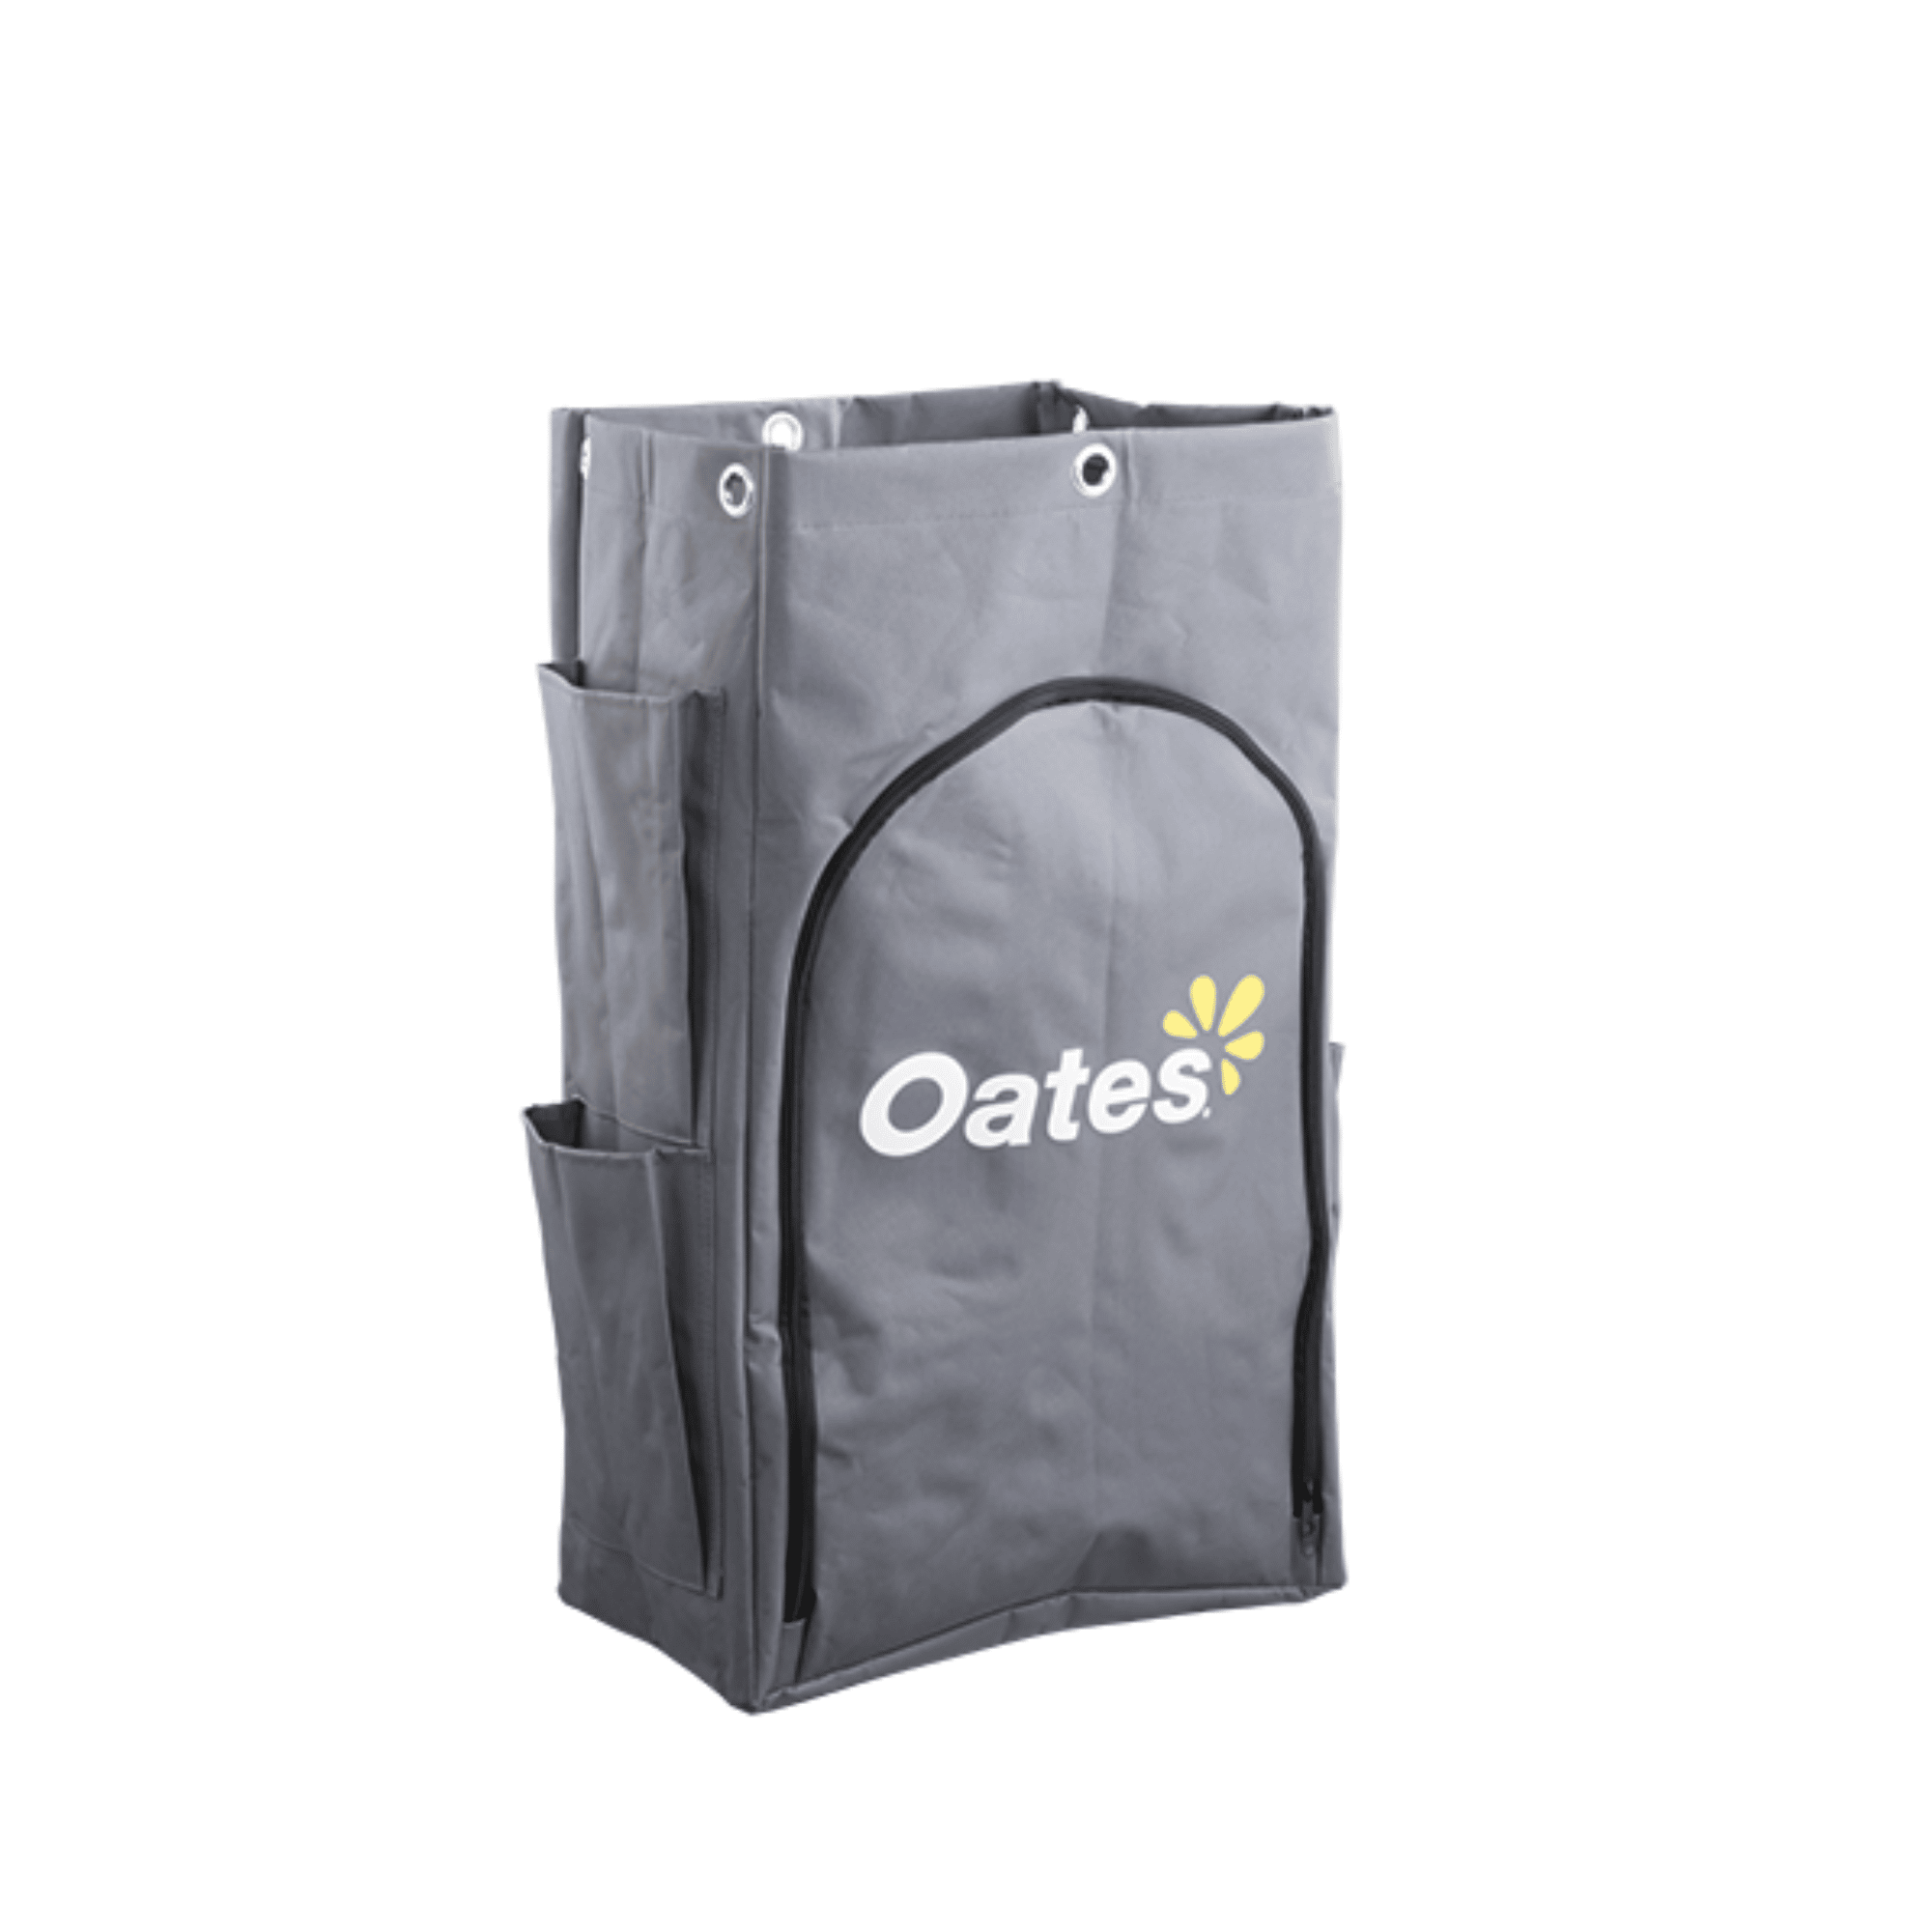 Oates Platinum Janitors Cart – Replacement Zip Bag